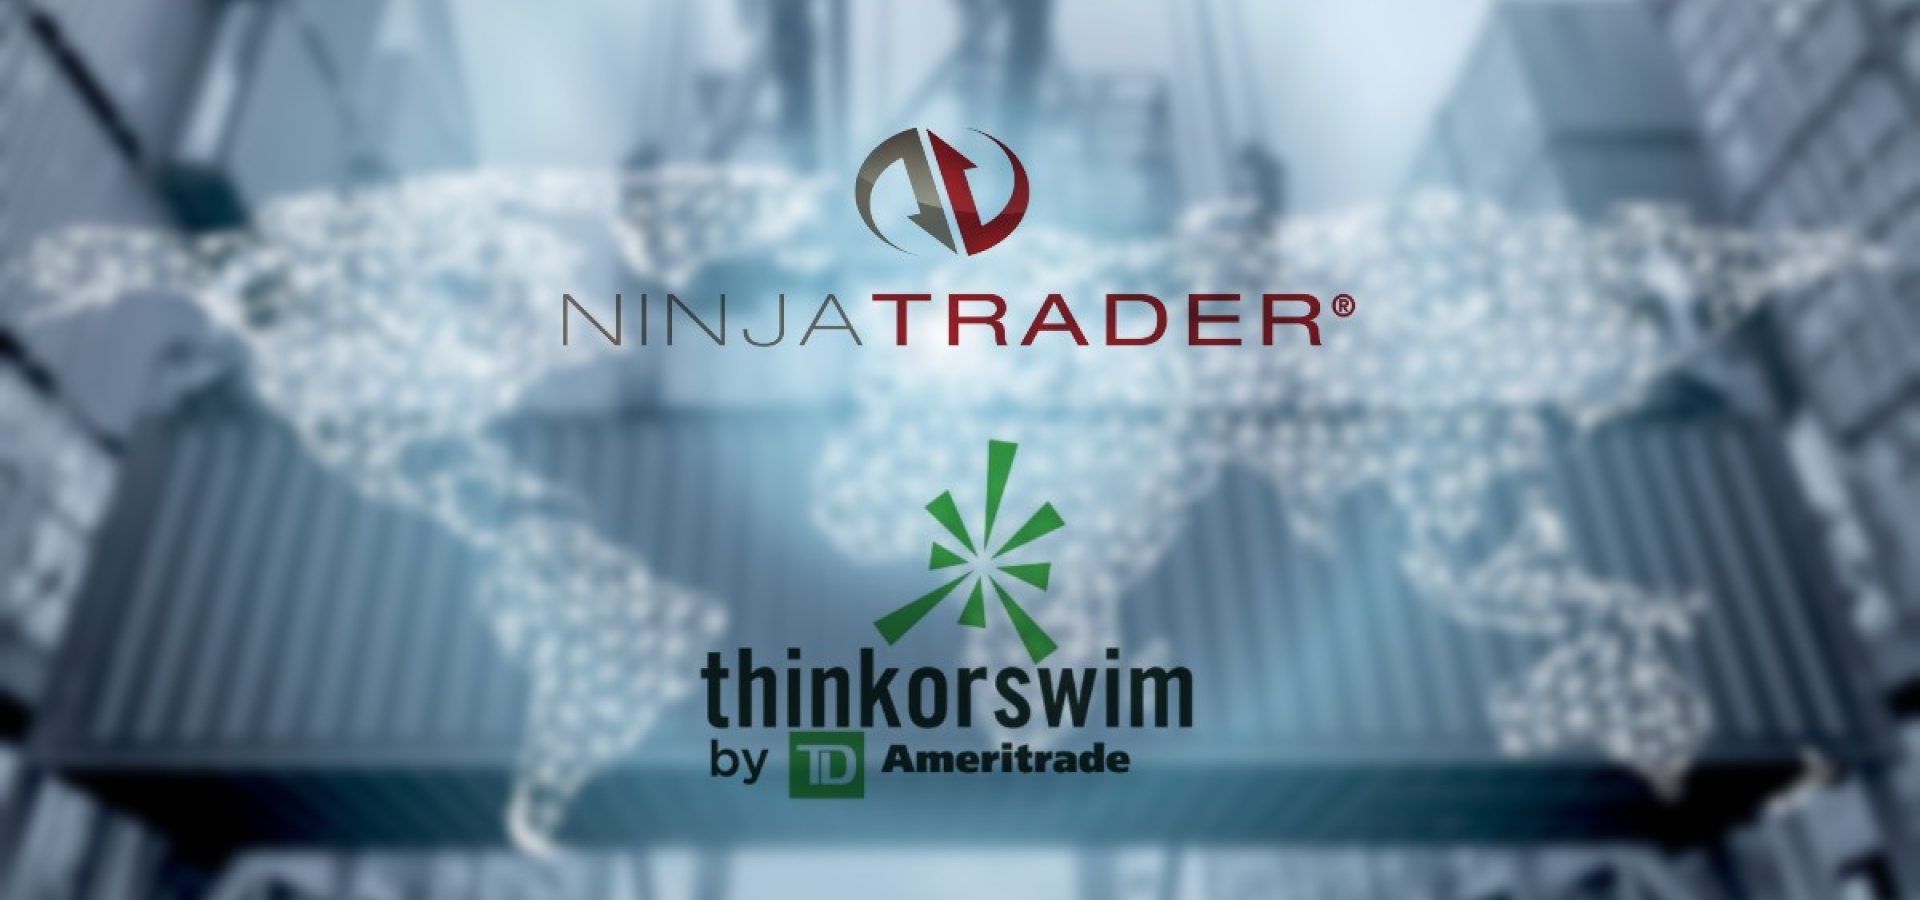 Ninjatrader vs Thinkorswim - side by side comparison